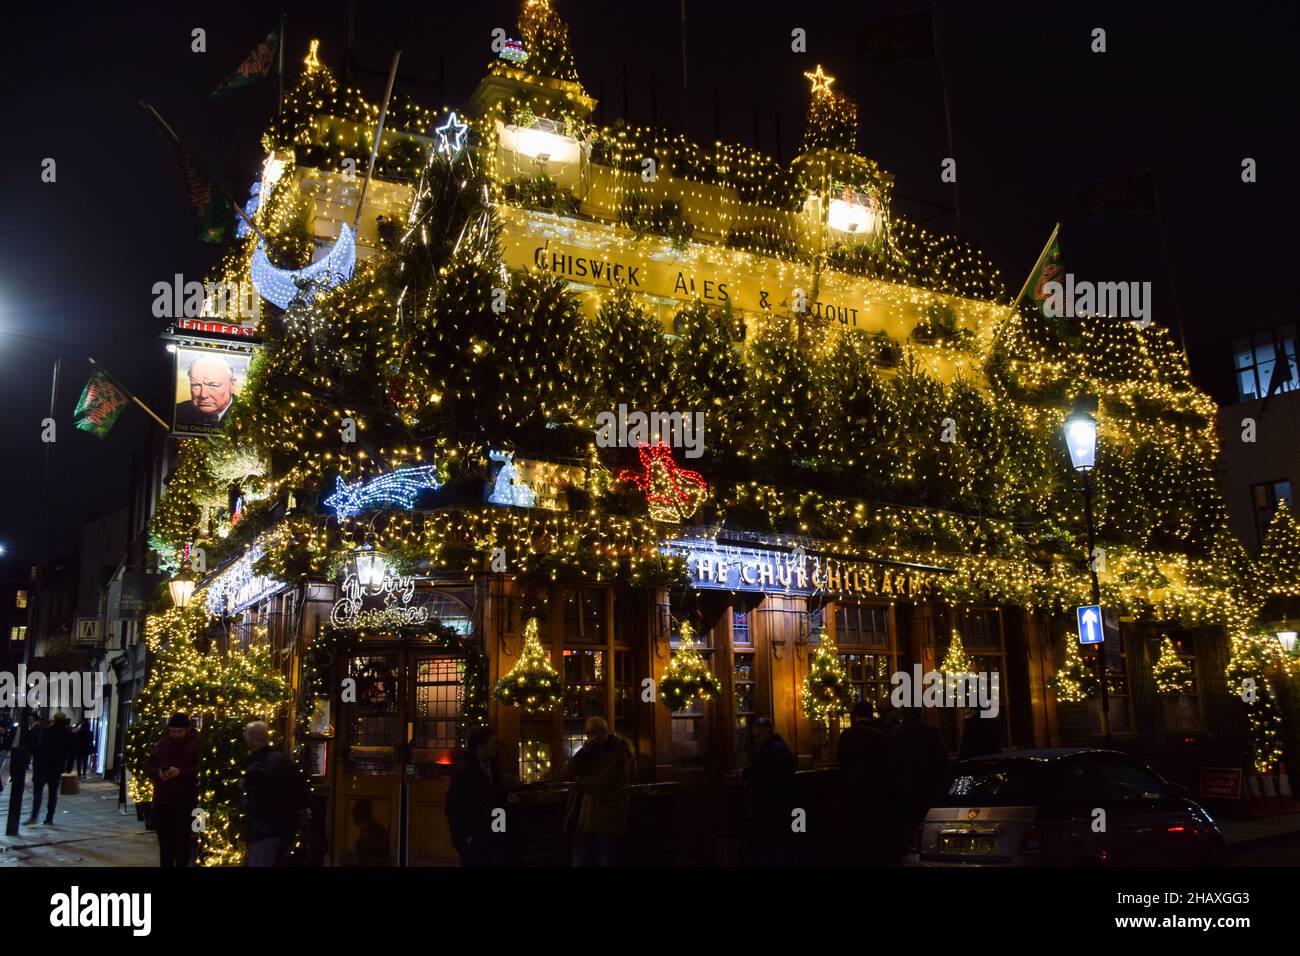 Thousands of Christmas ornaments adorn bar